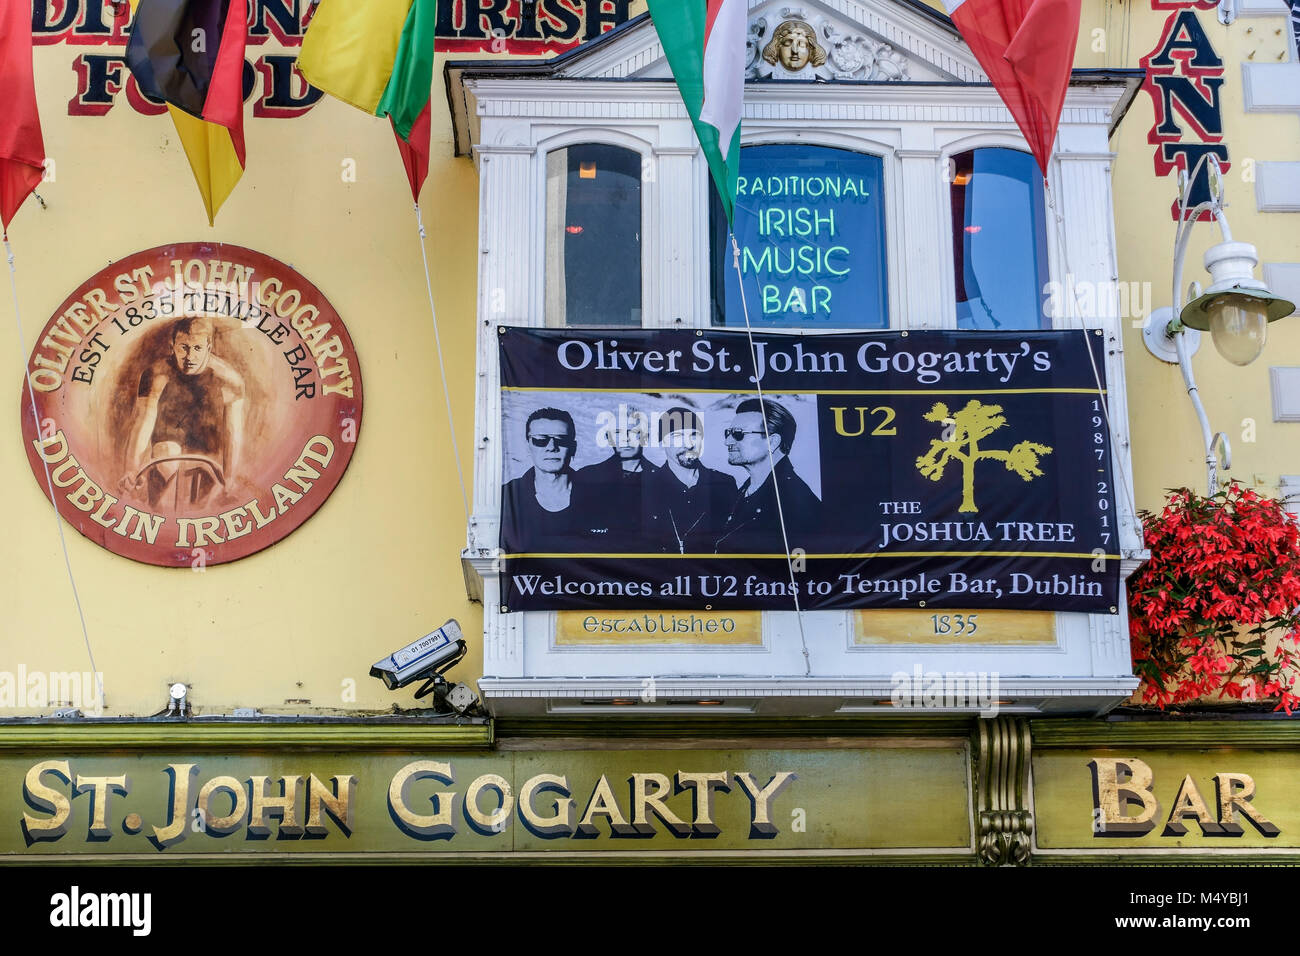 El Oliver St. John Gogarty, típico, pub irlandés tradicional. Zona de Temple Bar. Barrio de Bohemia y cultural. Dublín, República de Irlanda, Europa, UE. Foto de stock